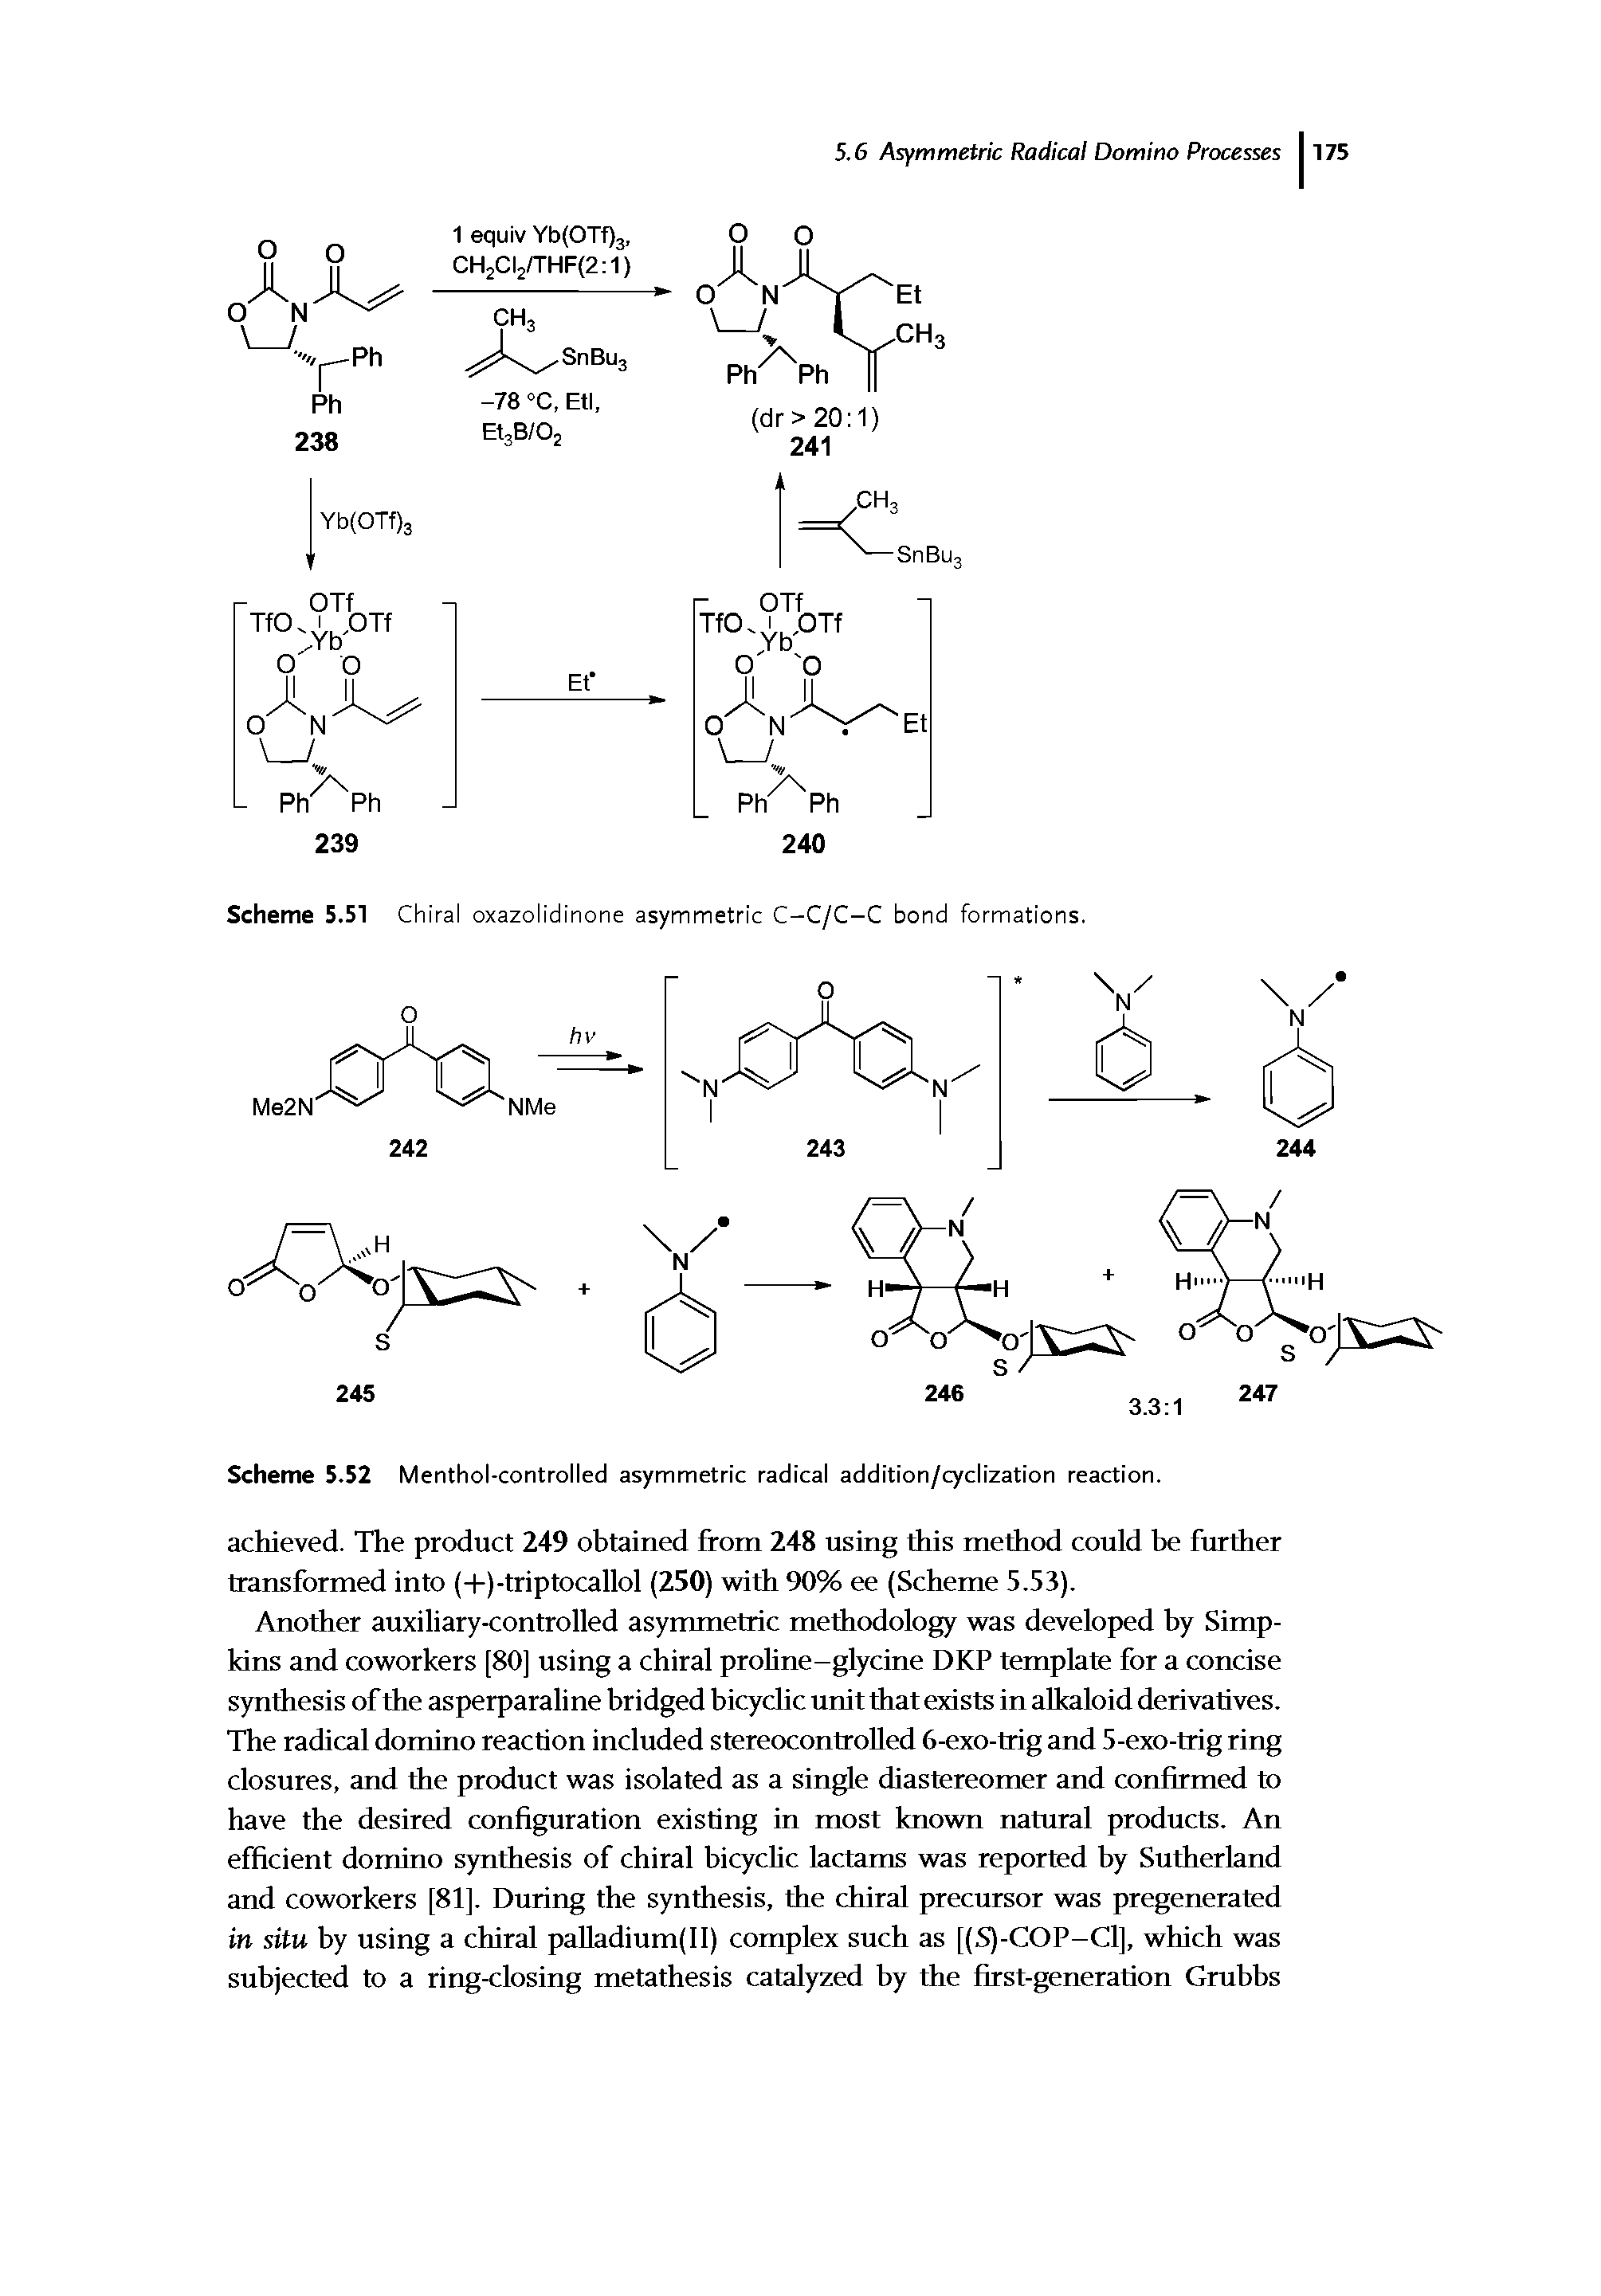 Scheme 5.52 Menthol-controlled asymmetric radical addition/cyclization reaction.